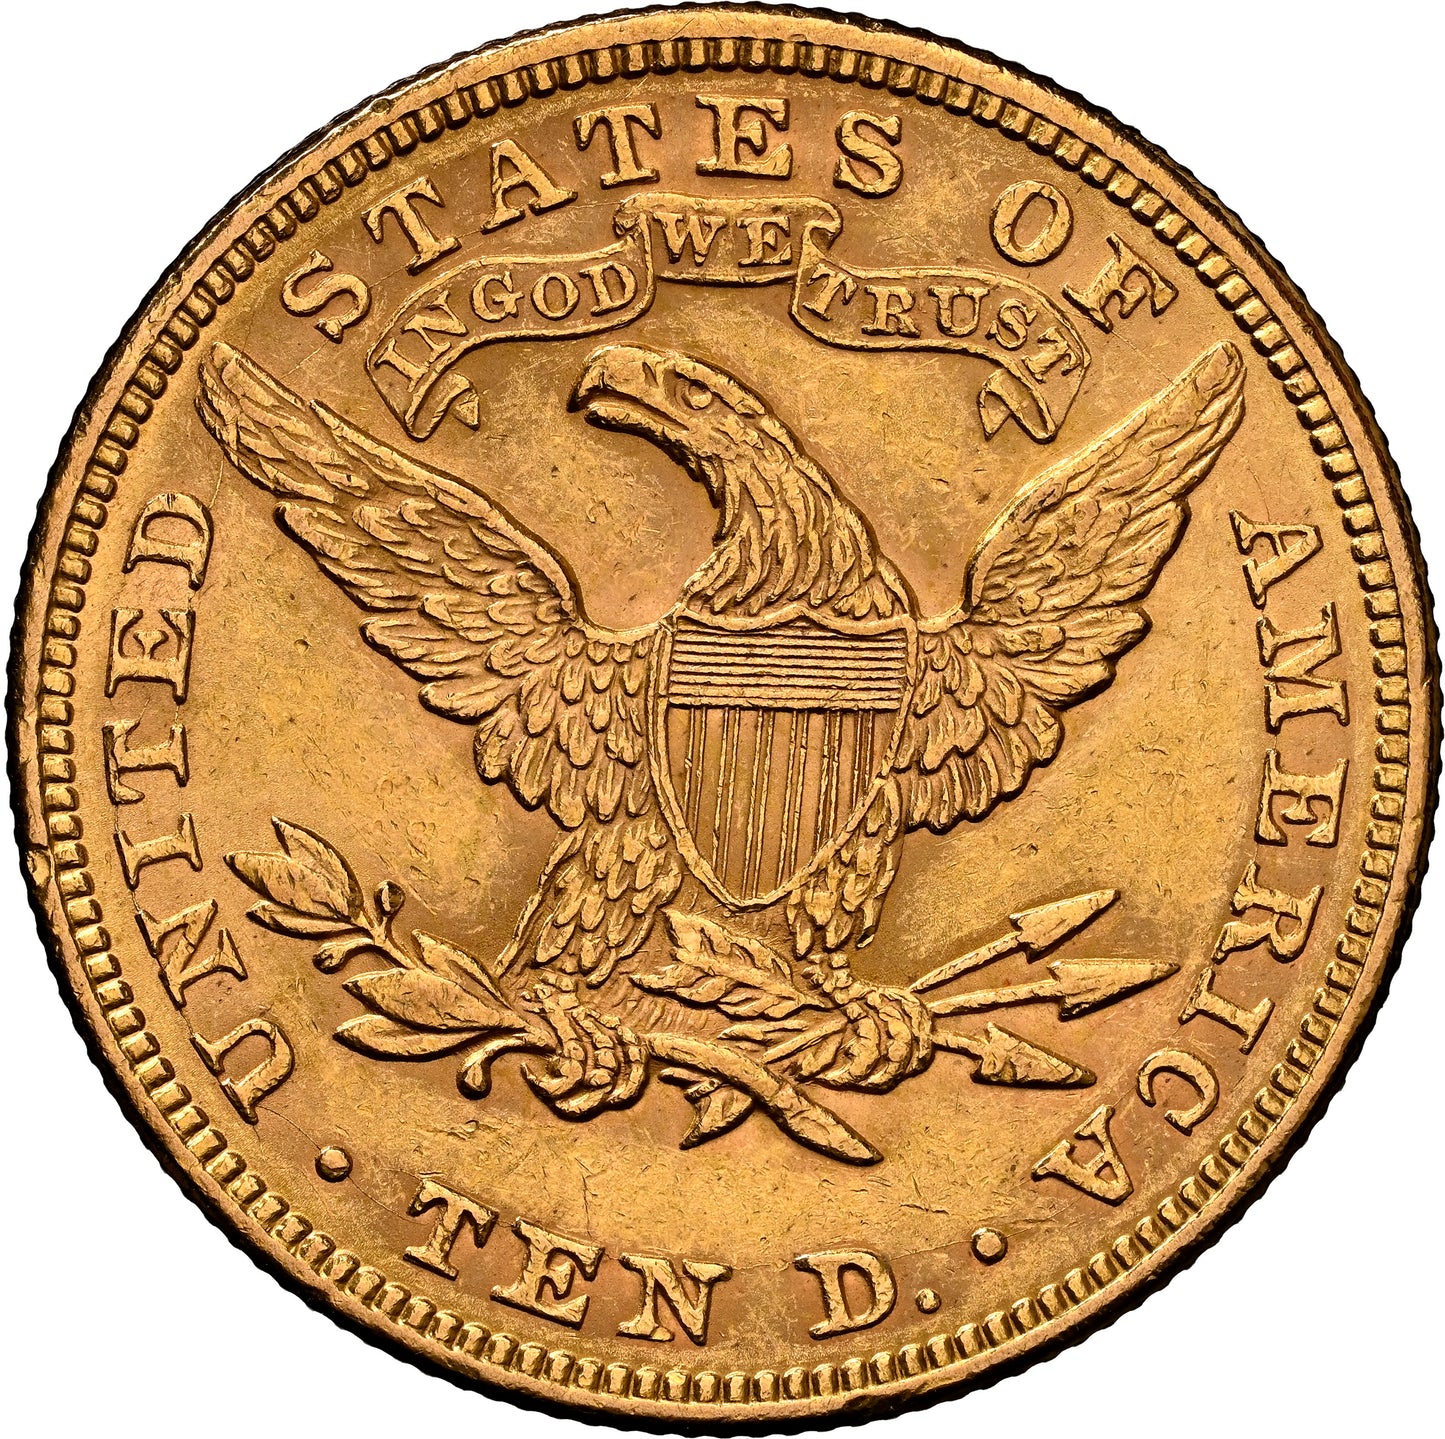 1894 $10.00 Gold Liberty Head NGC MS 61